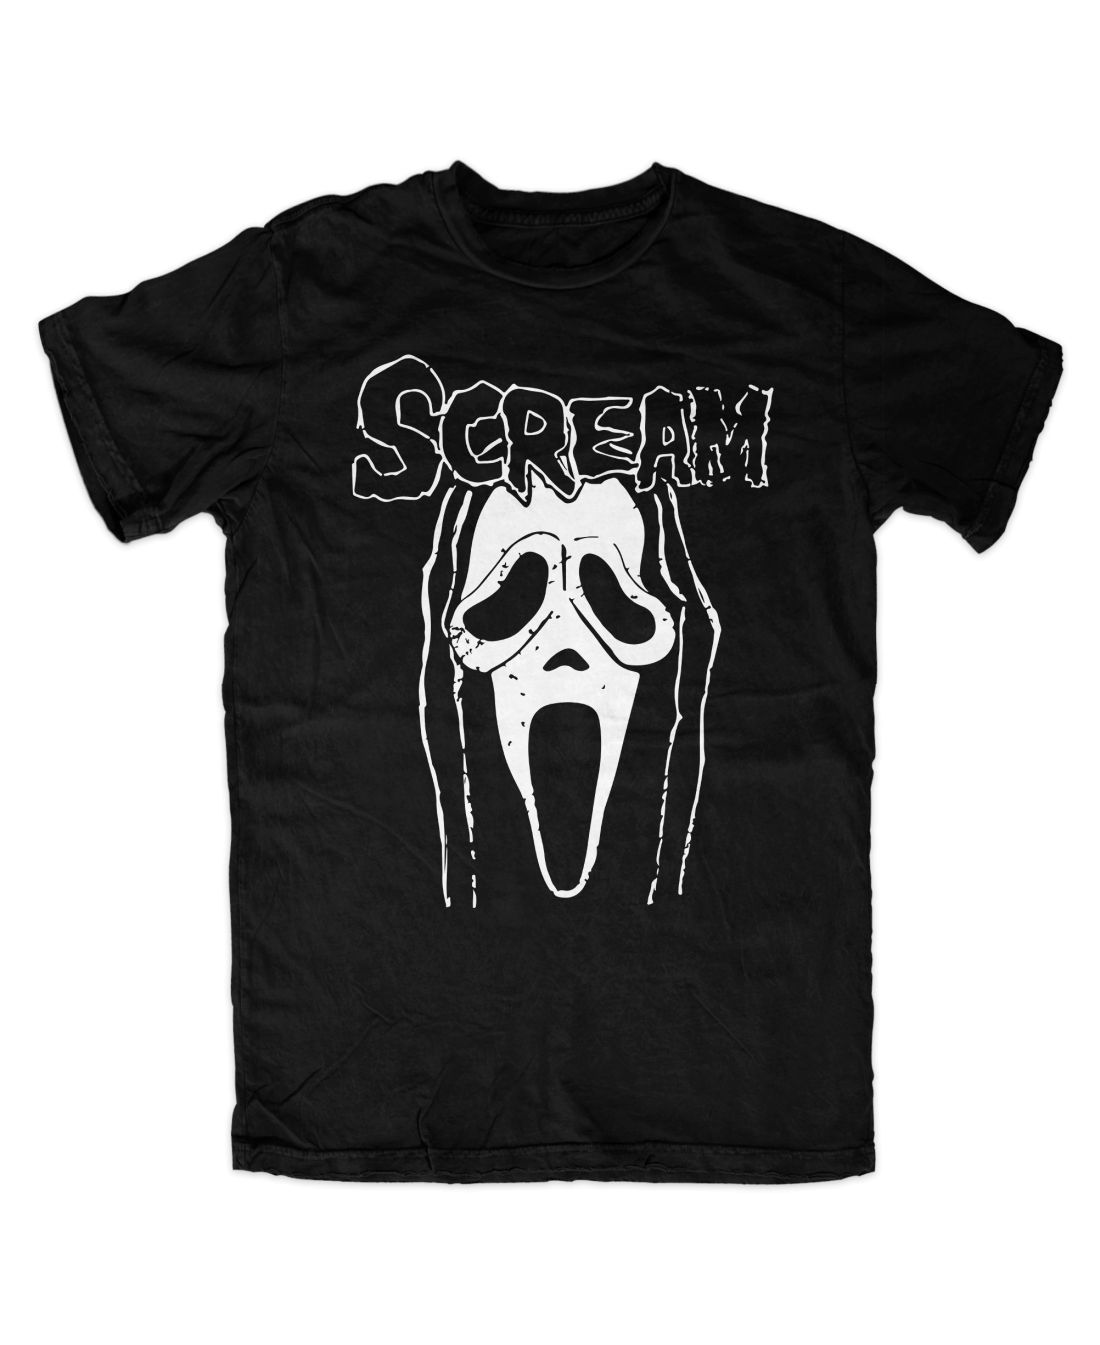 Scream 001 metal series